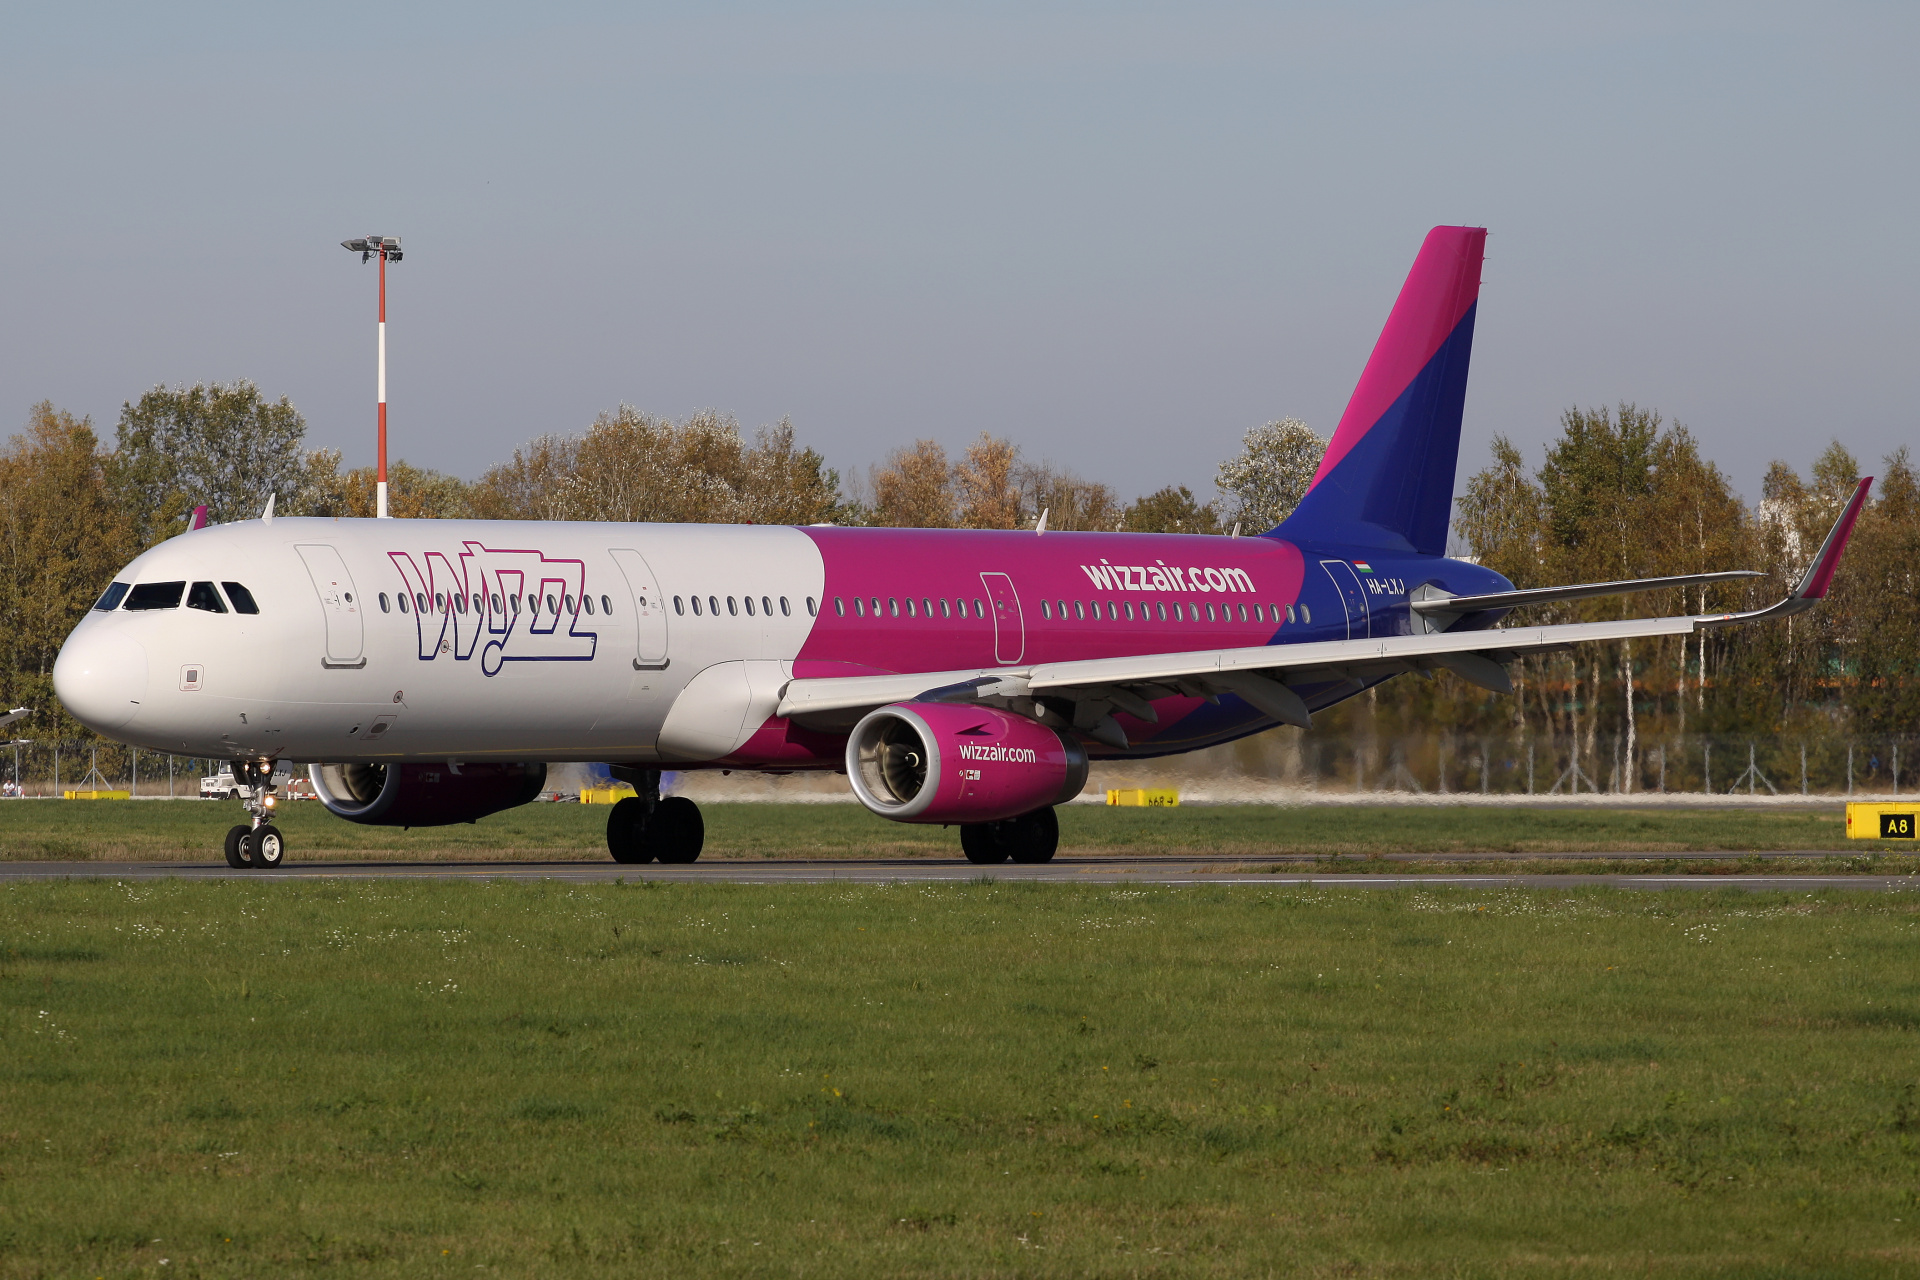 HA-LXJ (Aircraft » EPWA Spotting » Airbus A321-200 » Wizz Air)